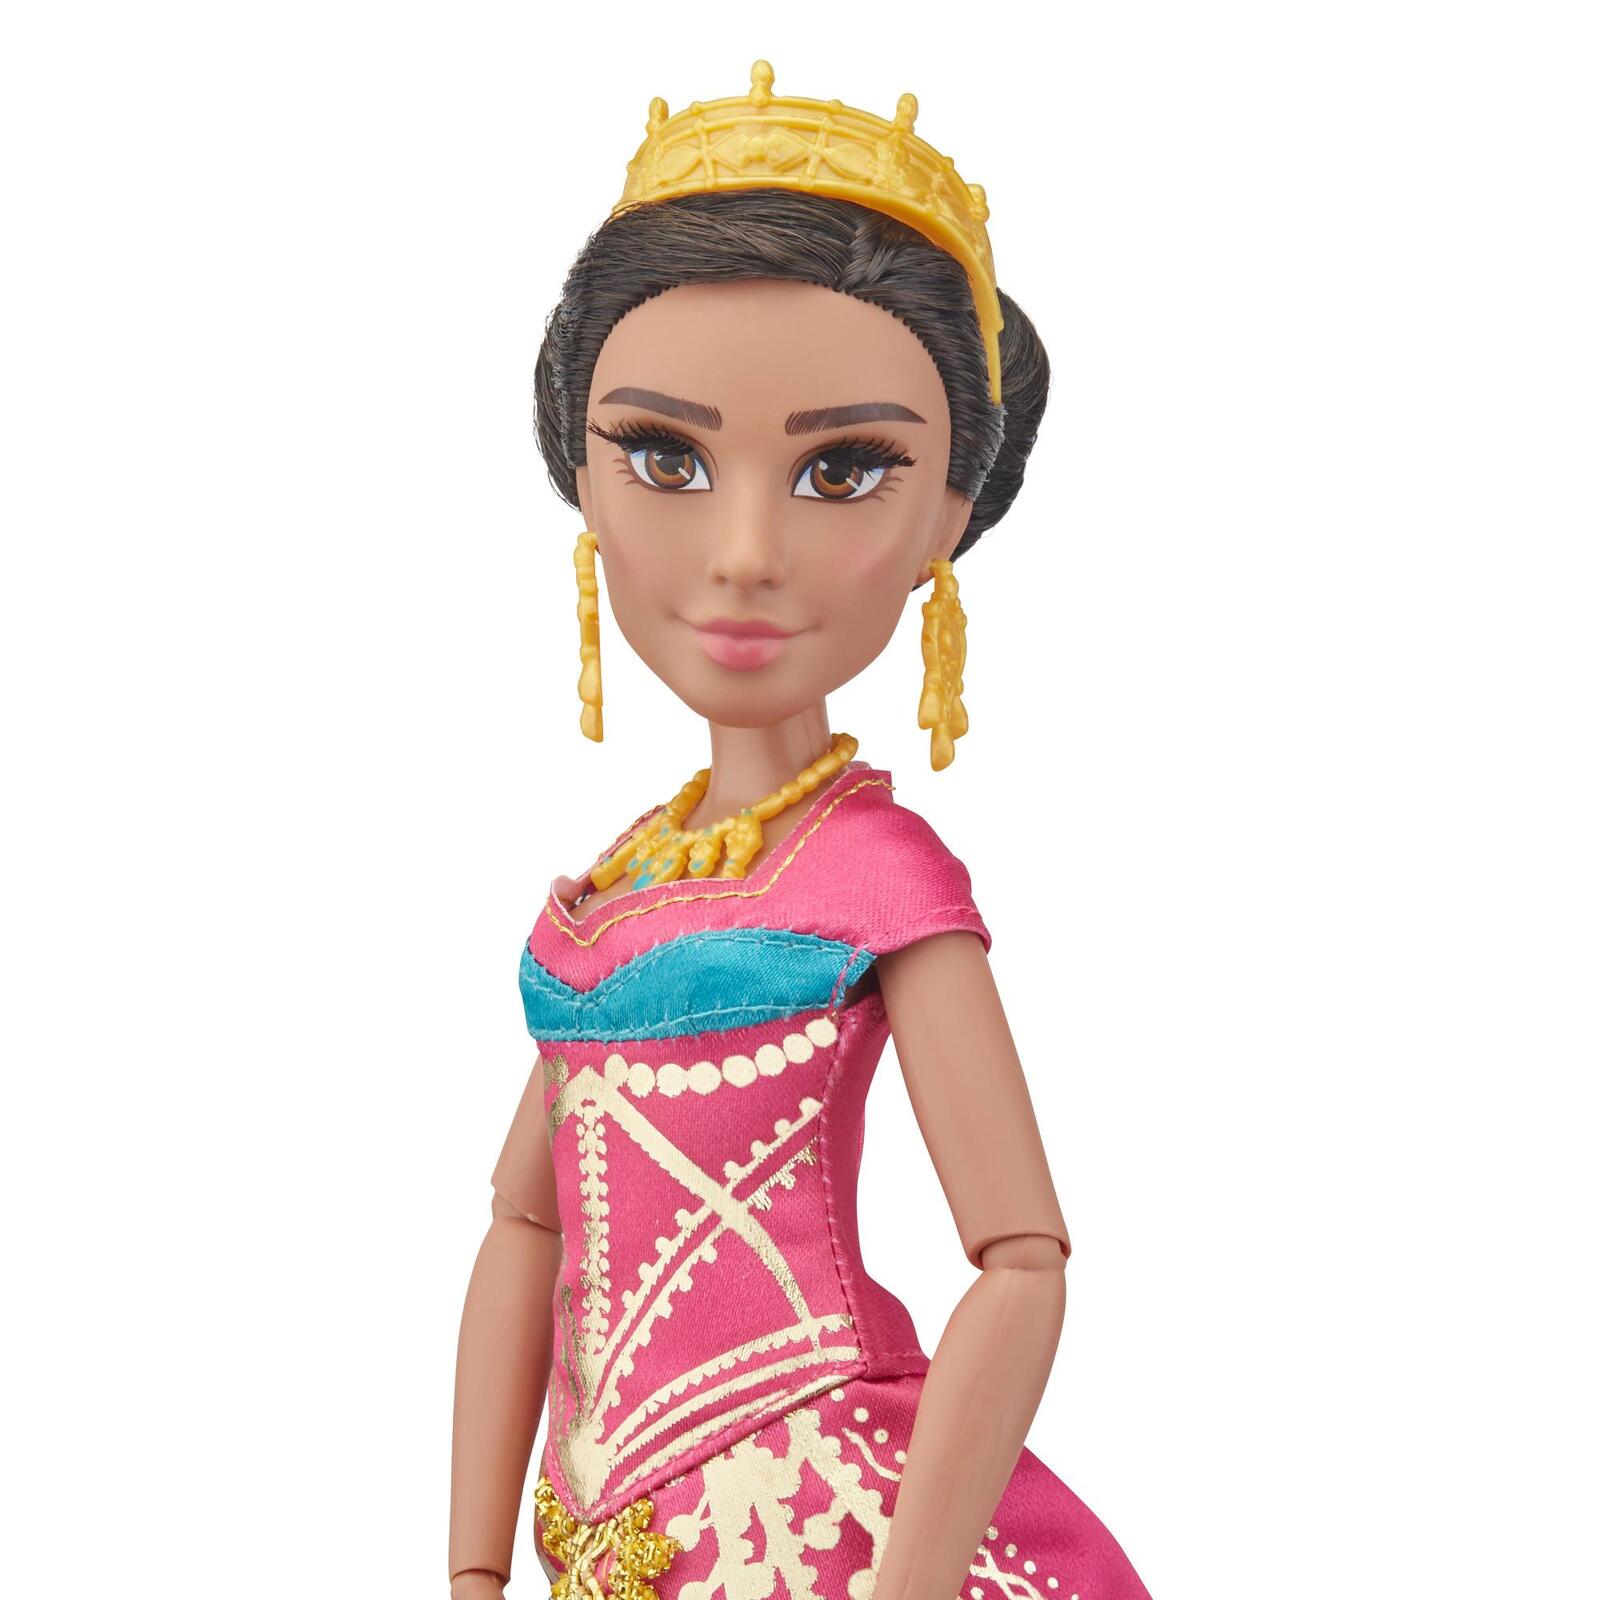 Disney Aladdin Deluxe Doll - Glamorous Jasmin